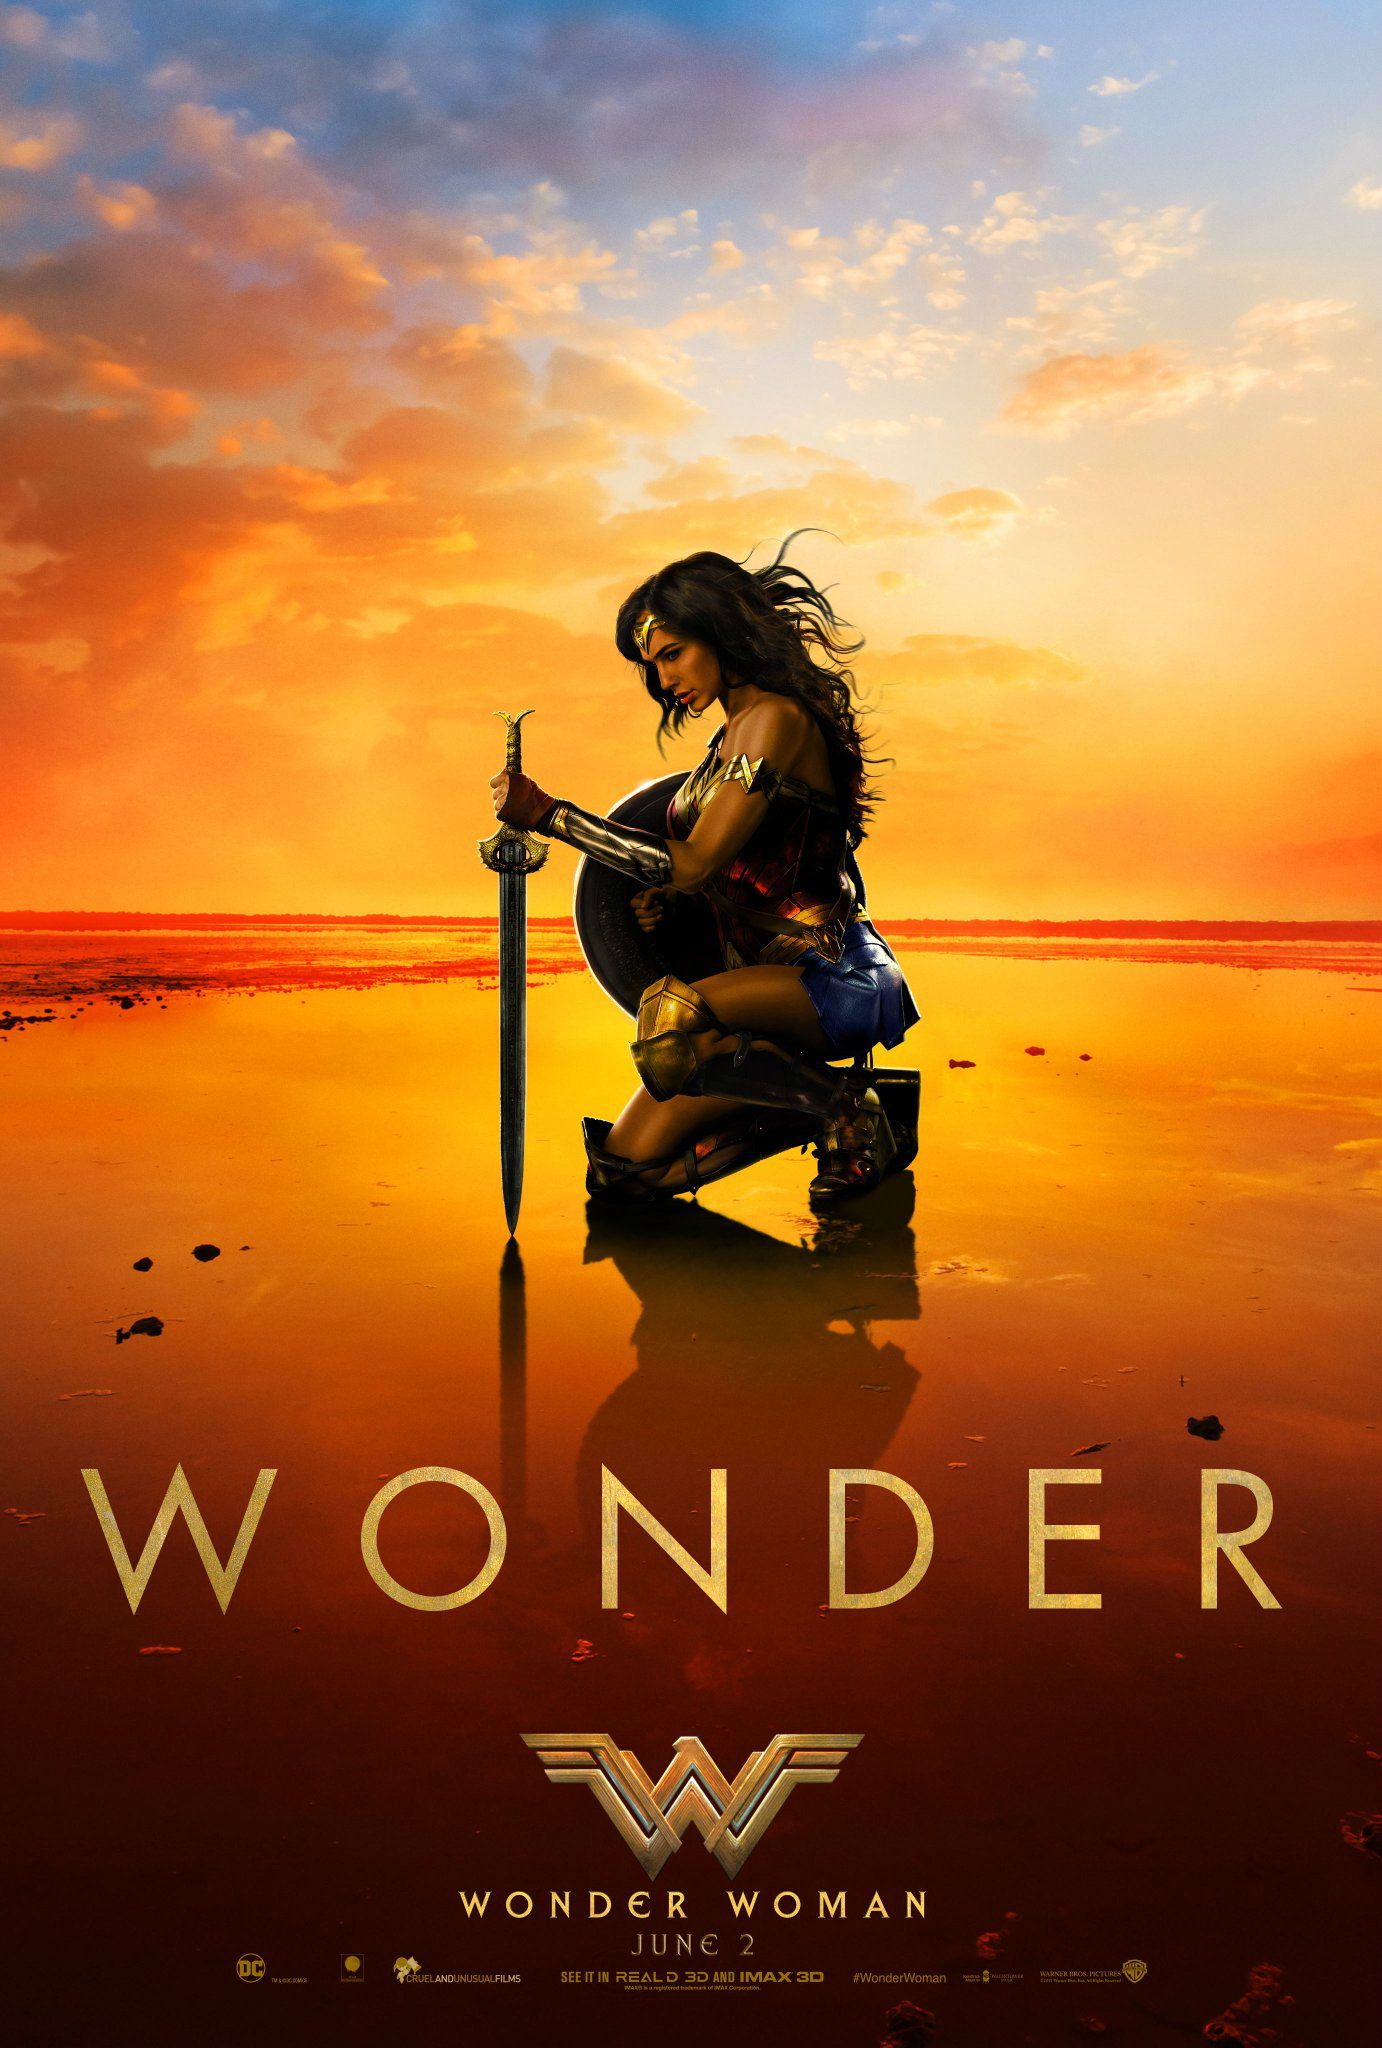 Wonder Woman movie poster - 'Wonder'